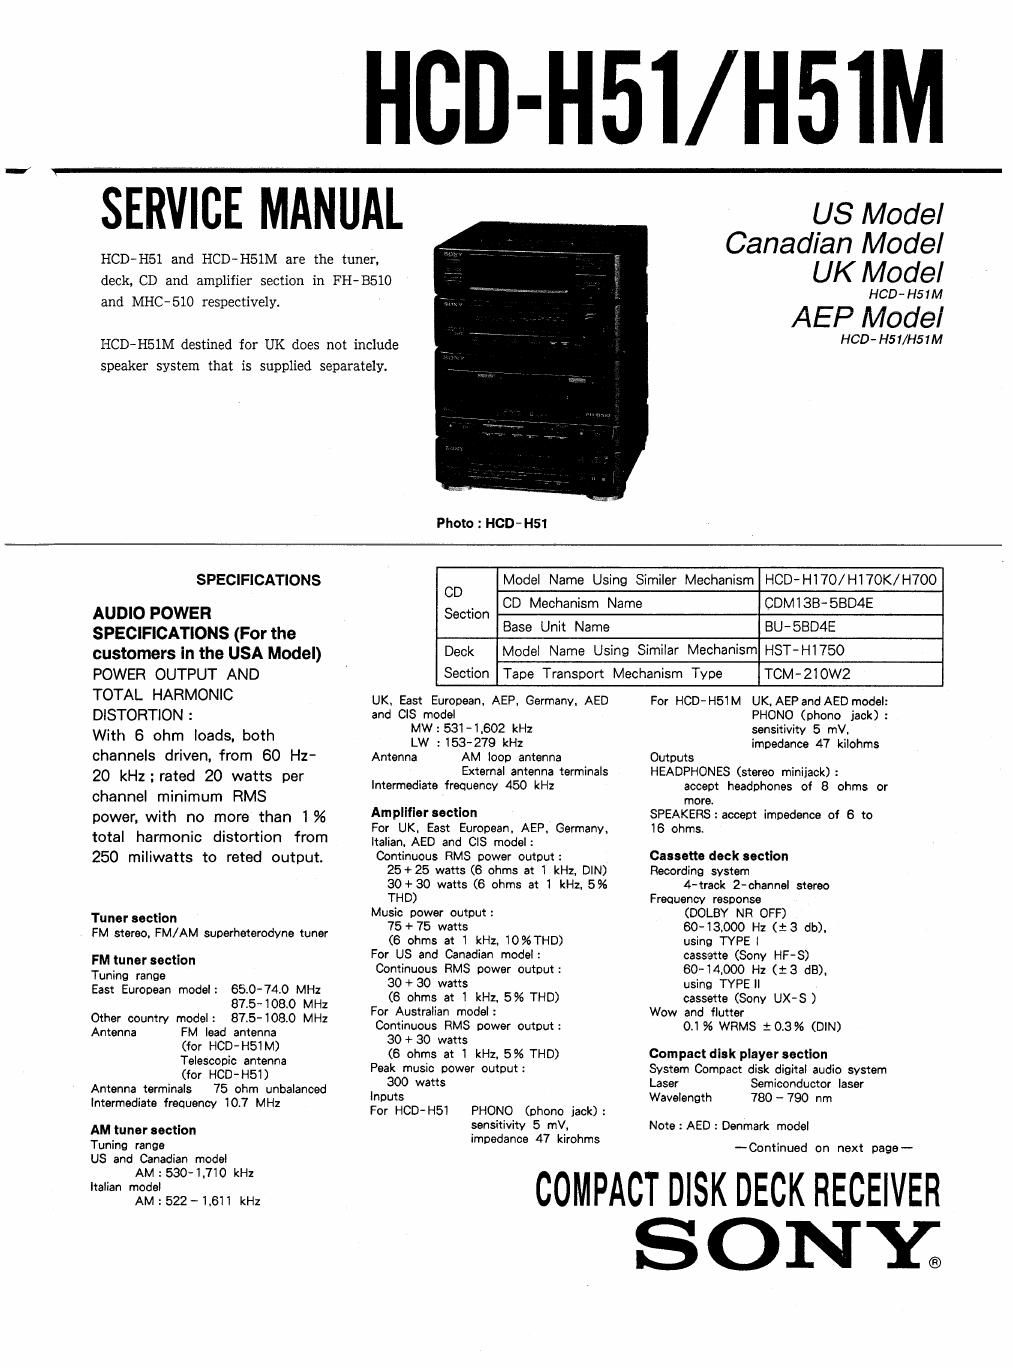 sony hcd h 51 m service manual